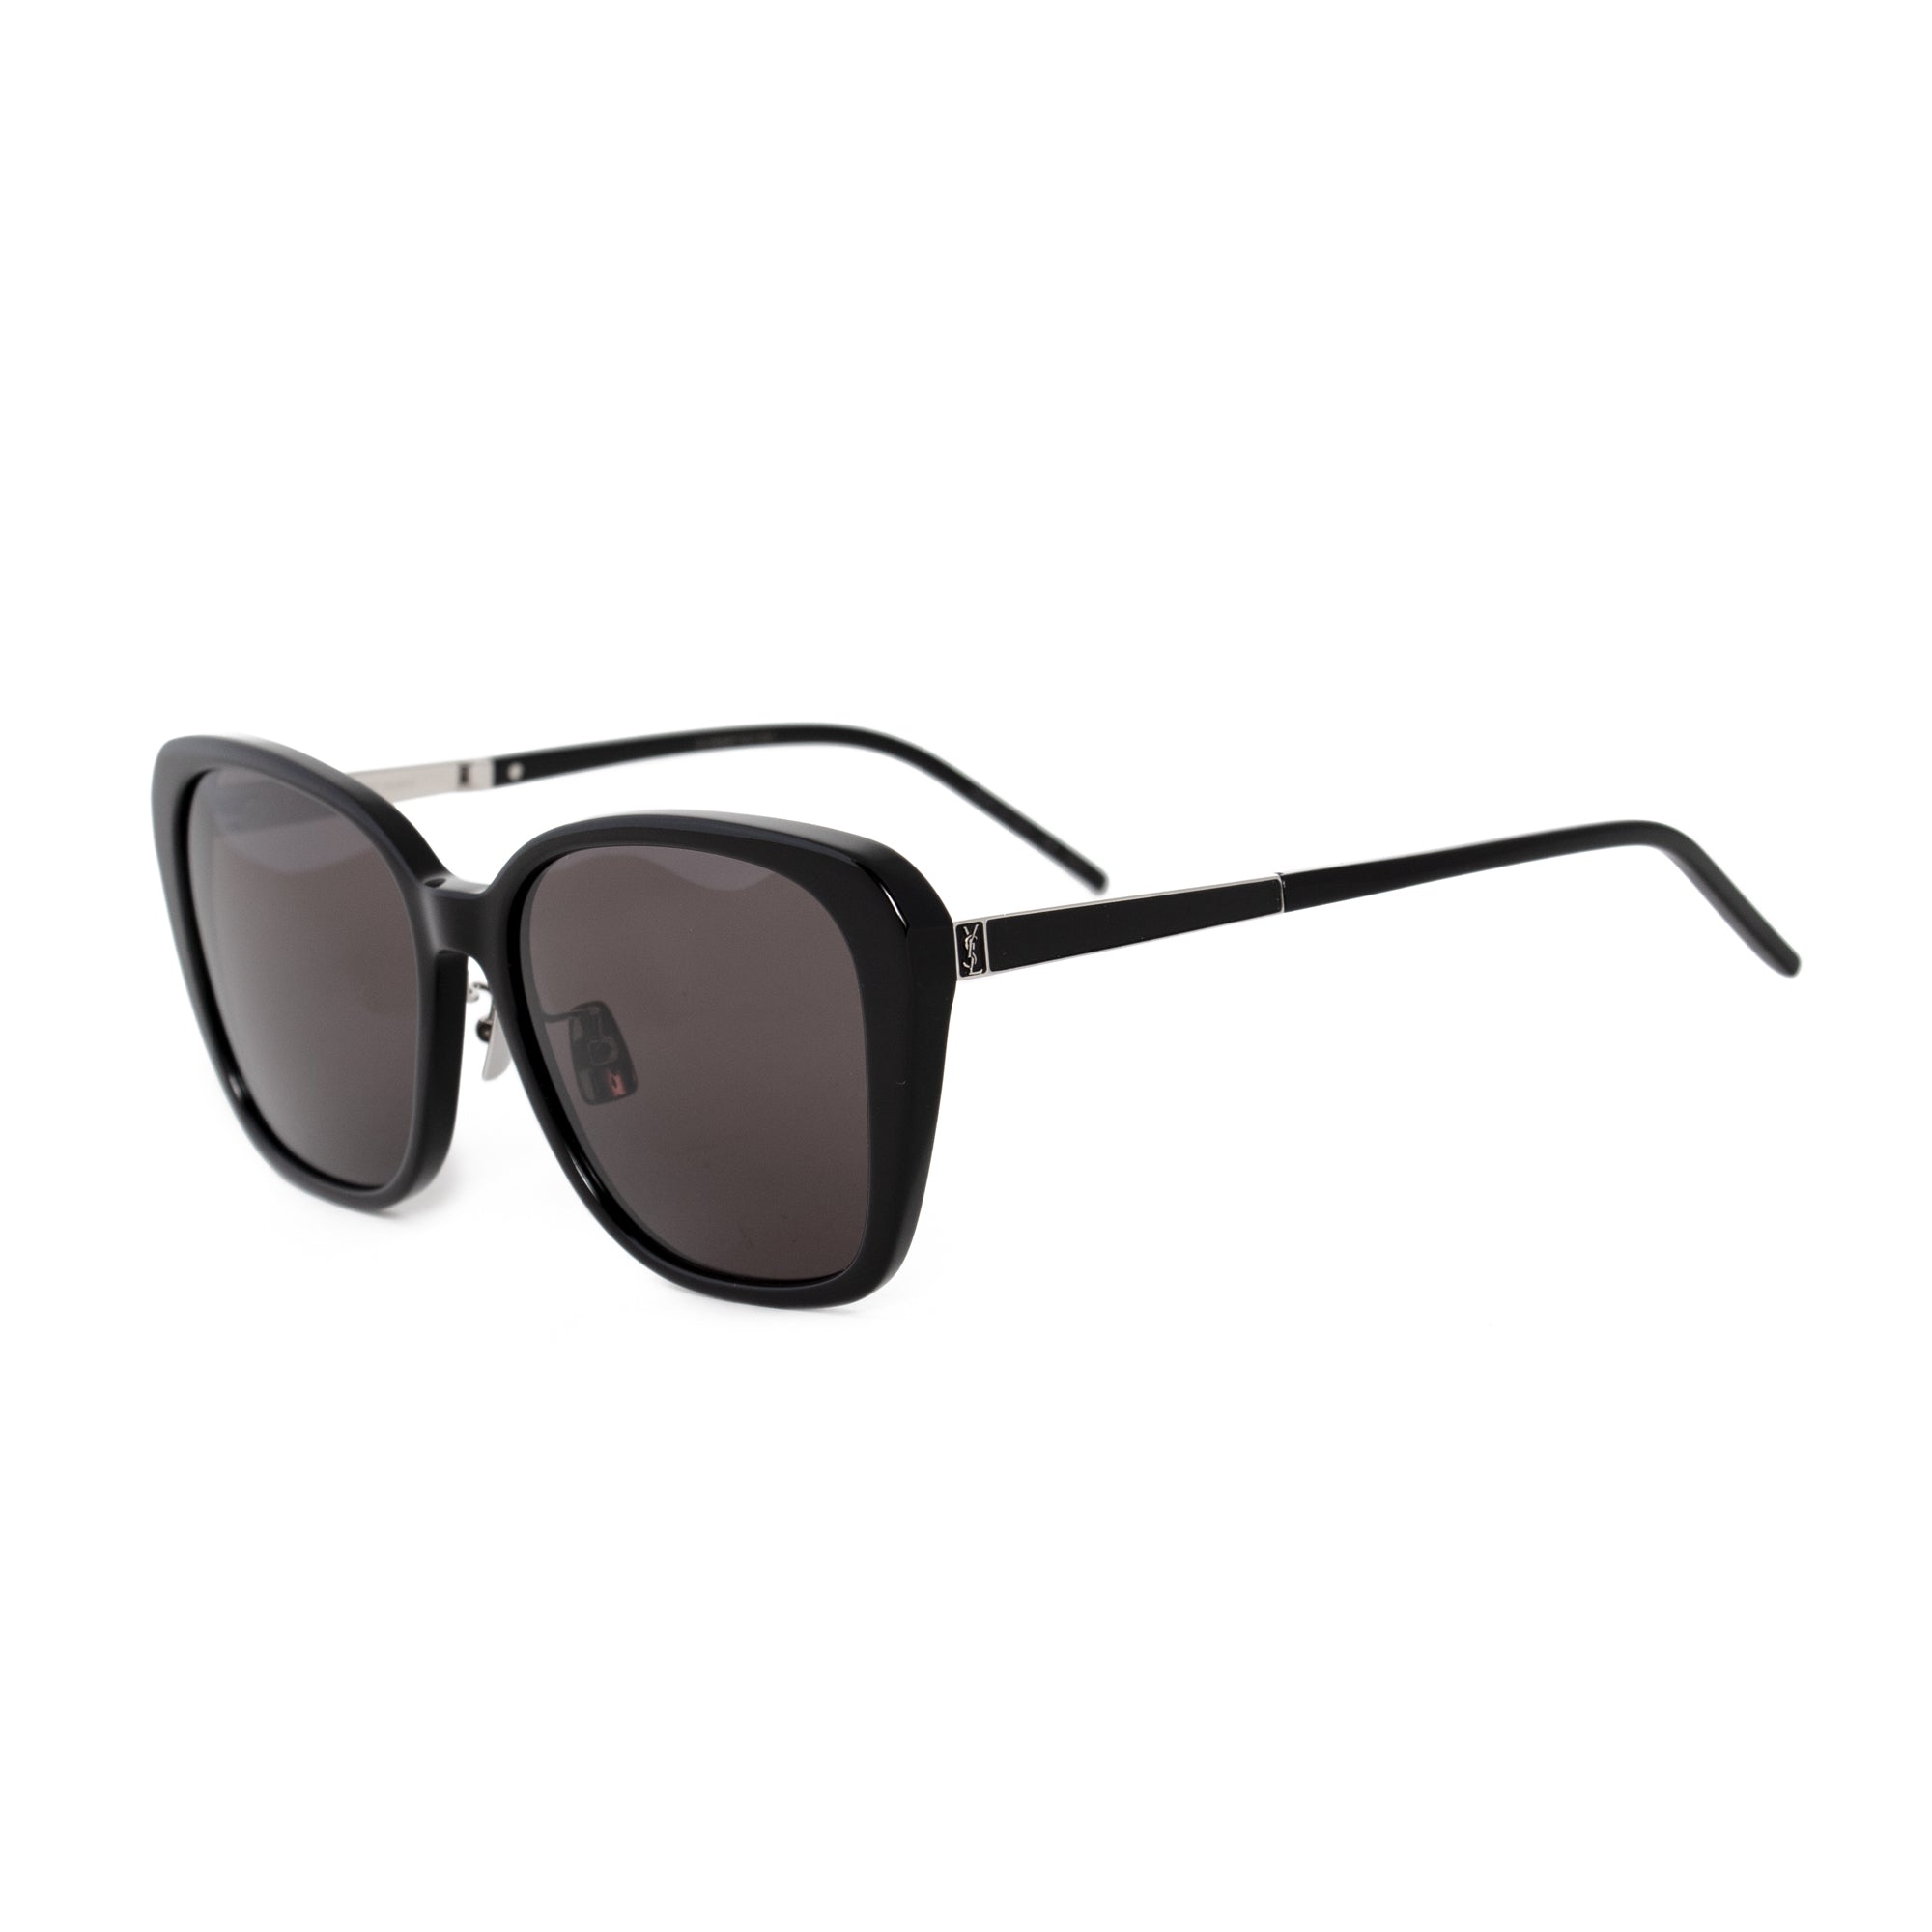 Saint Laurent Square Sunglasses SLM78F 001 58